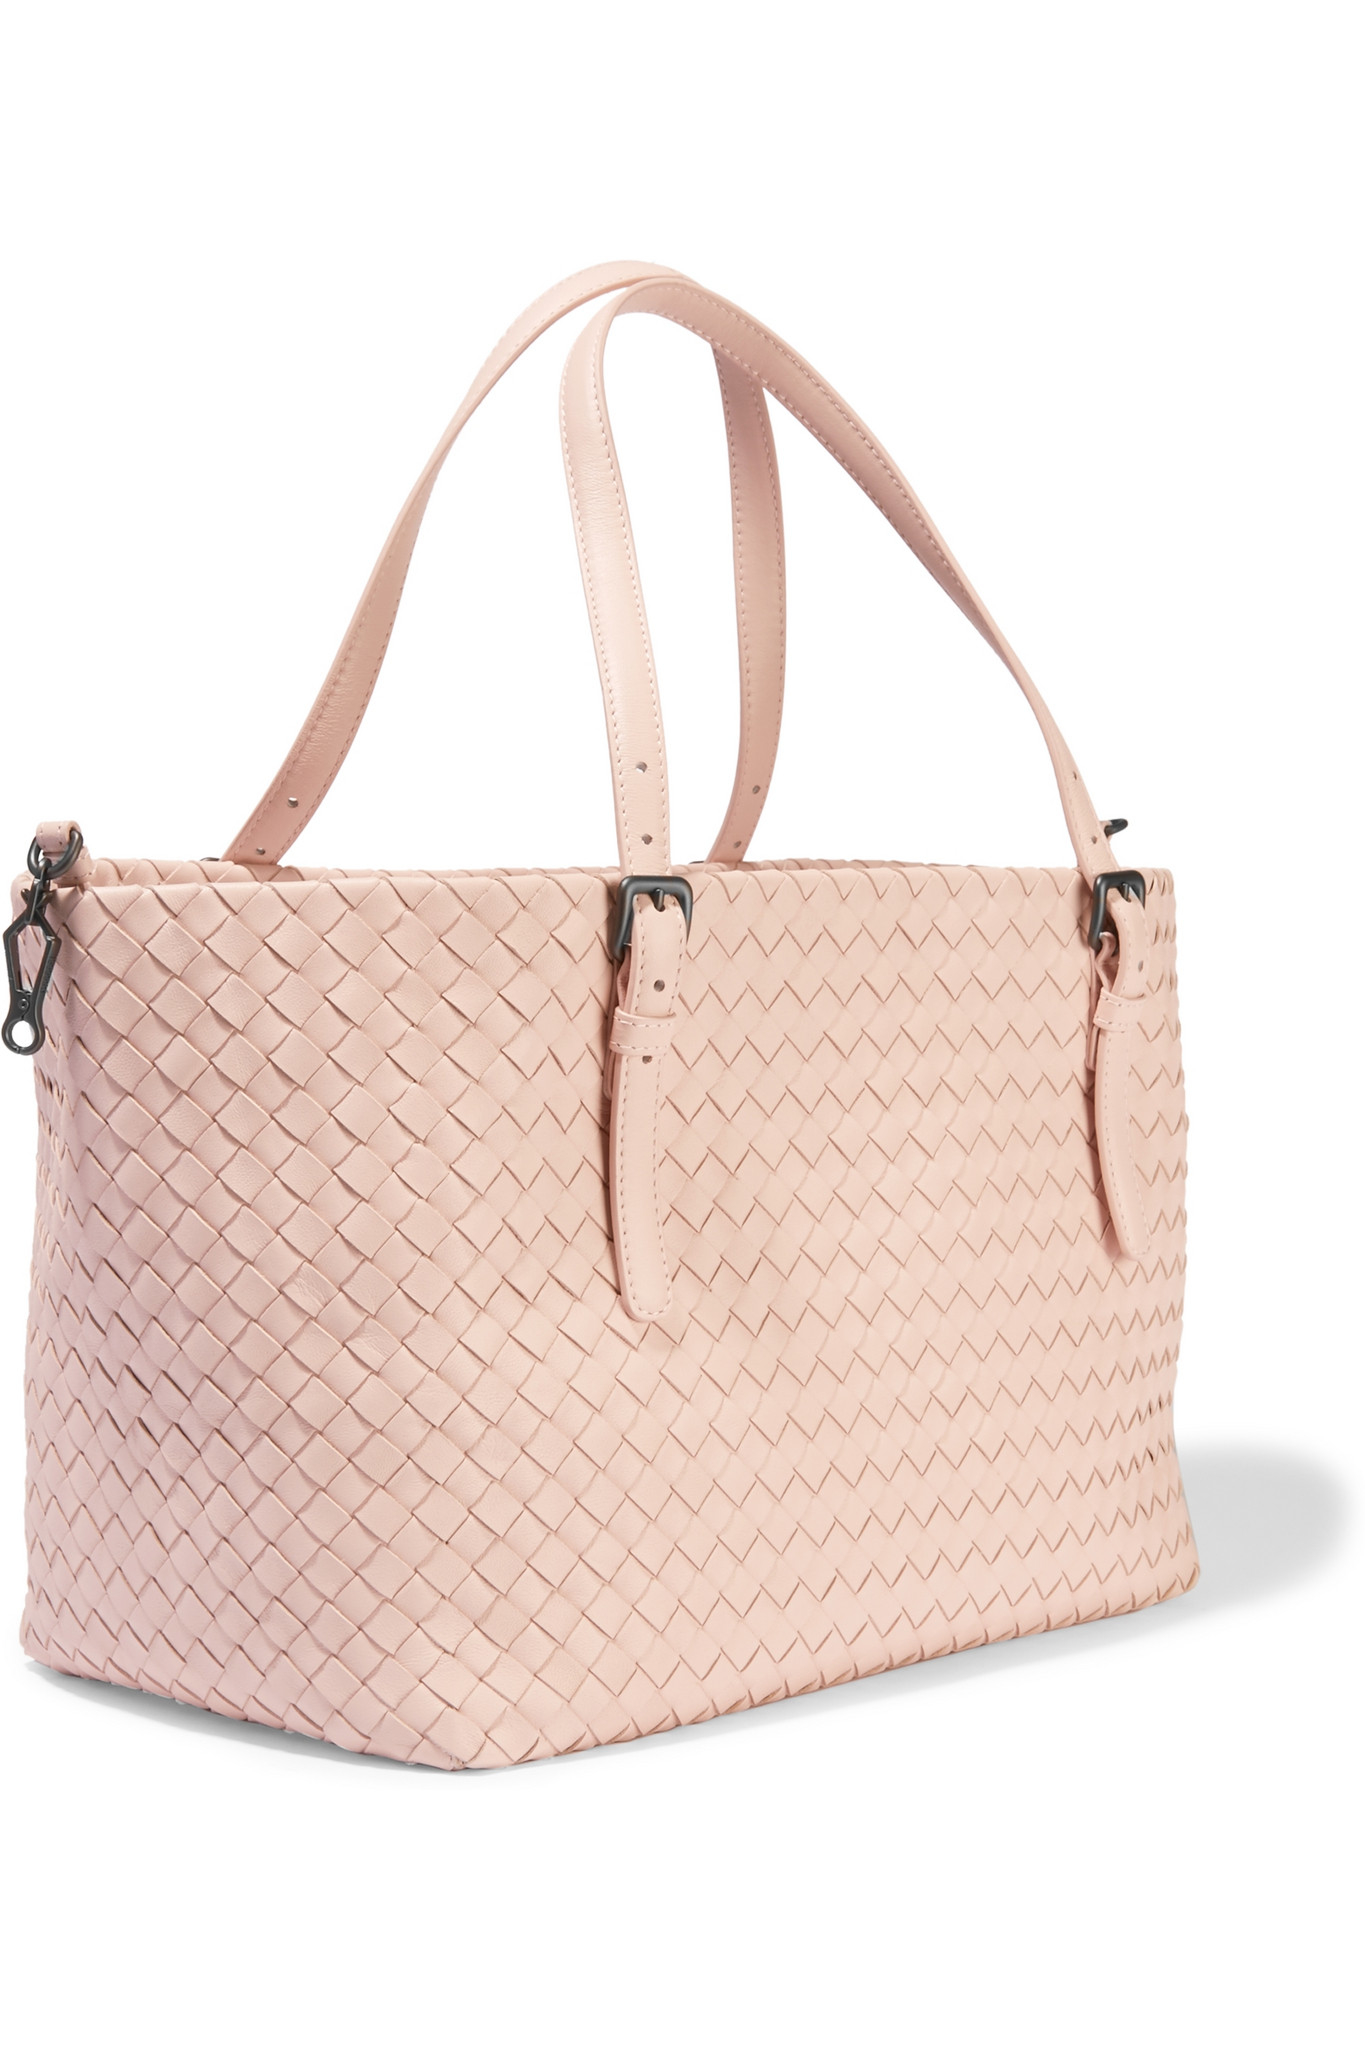 Lyst - Bottega Veneta Shopper Medium Intrecciato Leather Tote in Pink